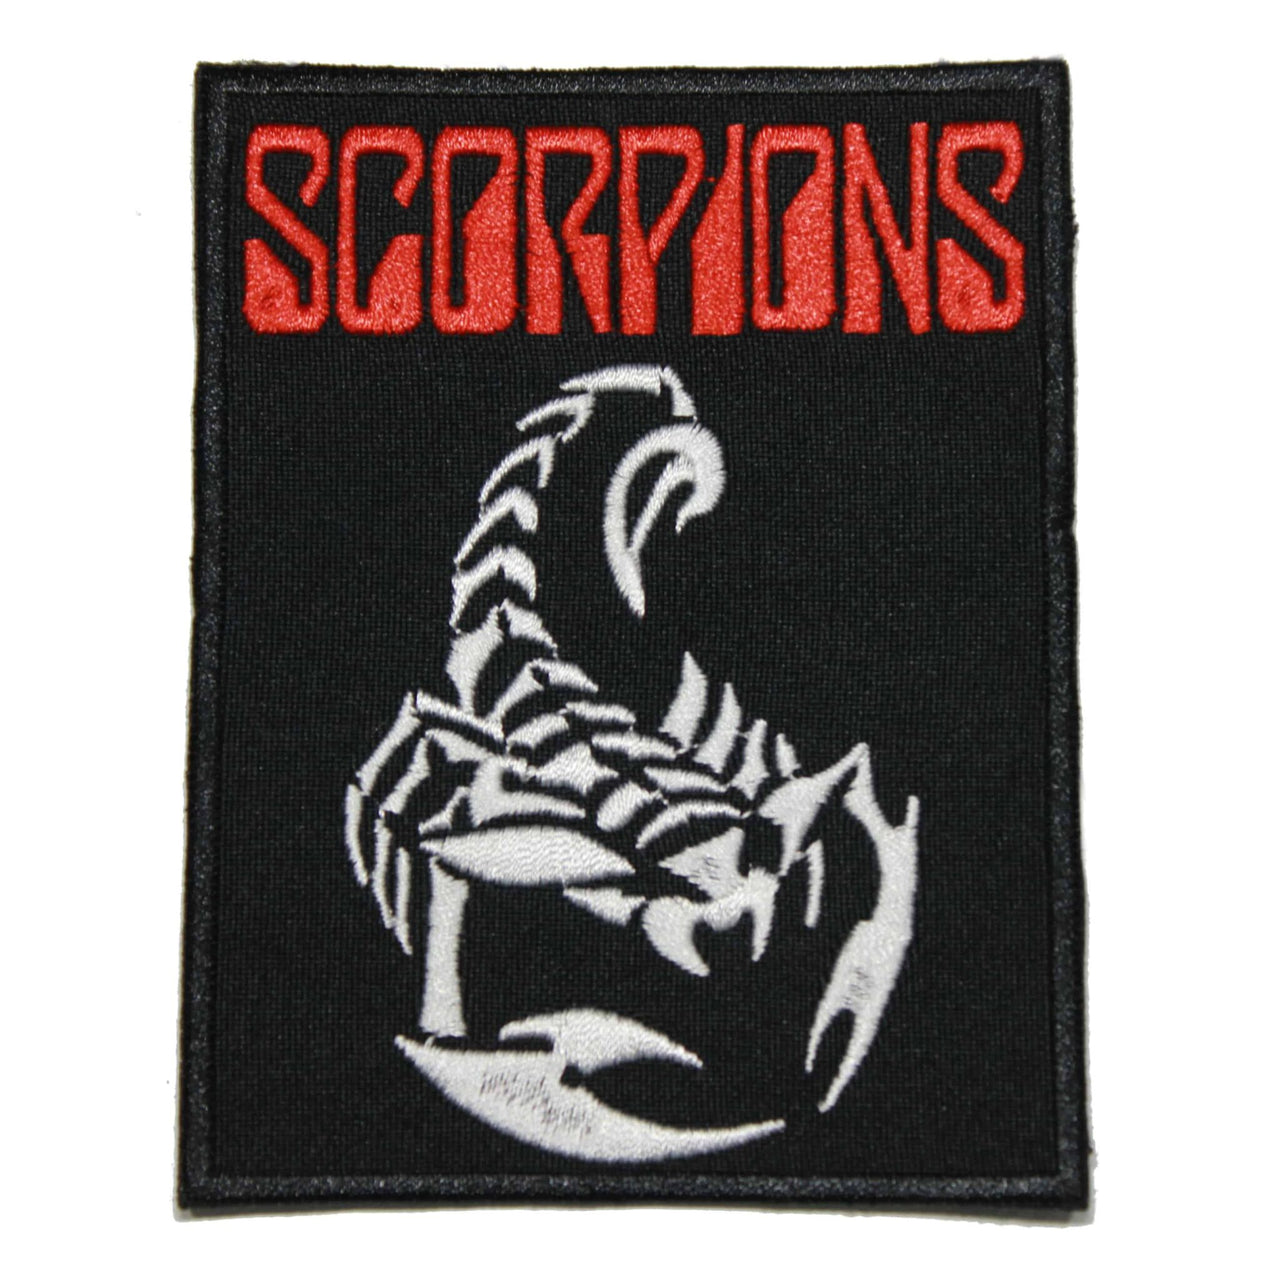 Scorpions Band Patch